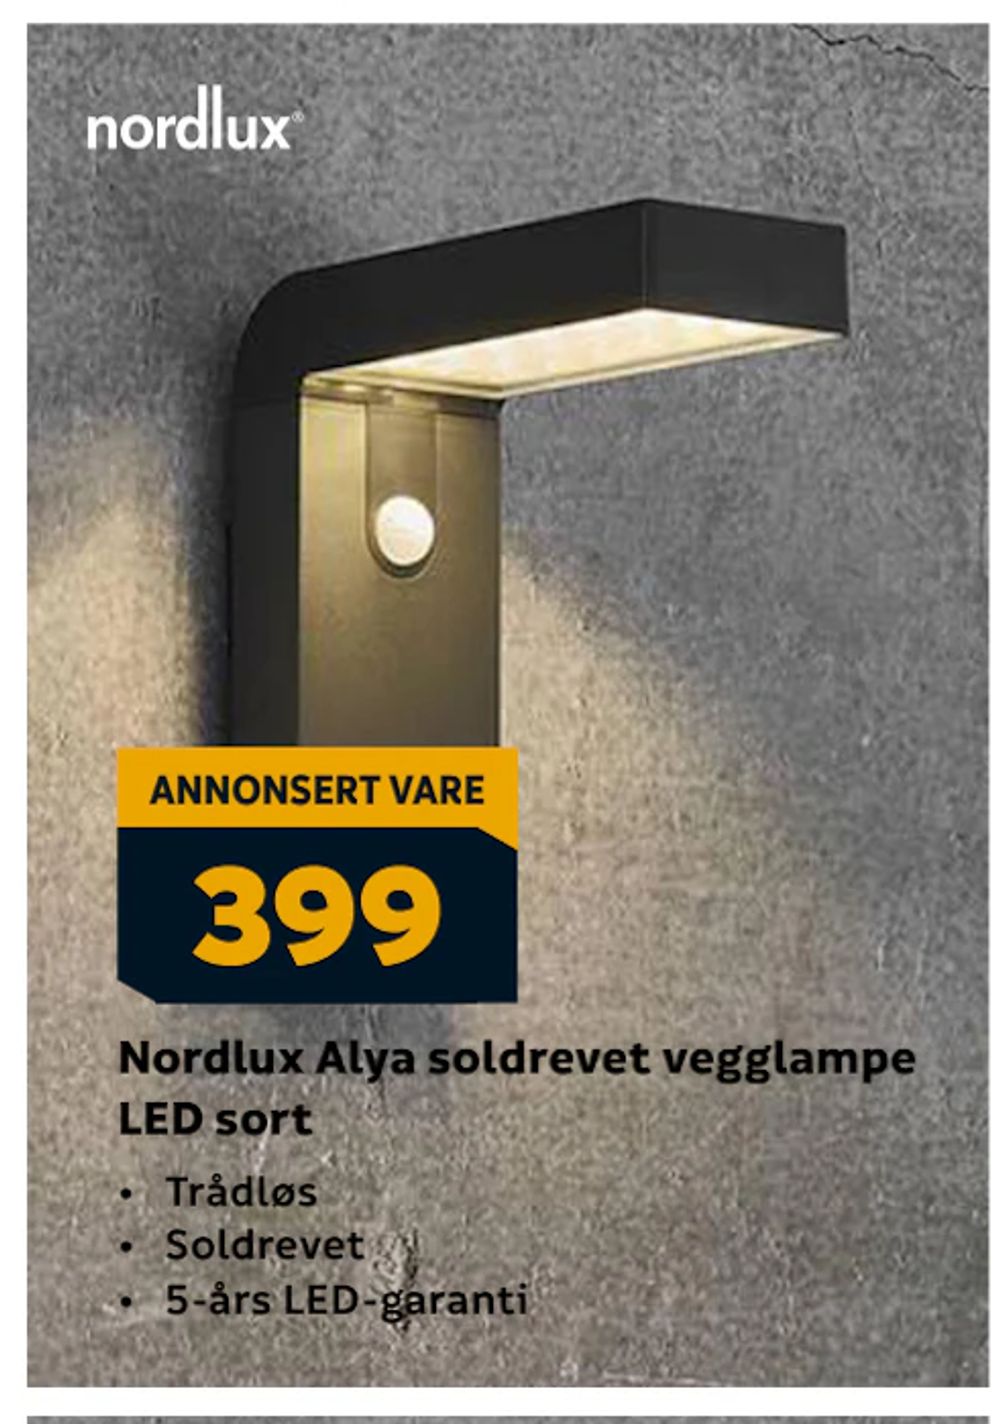 Tilbud på Nordlux Alya soldrevet vegglampe LED sort fra Megaflis til 399 kr